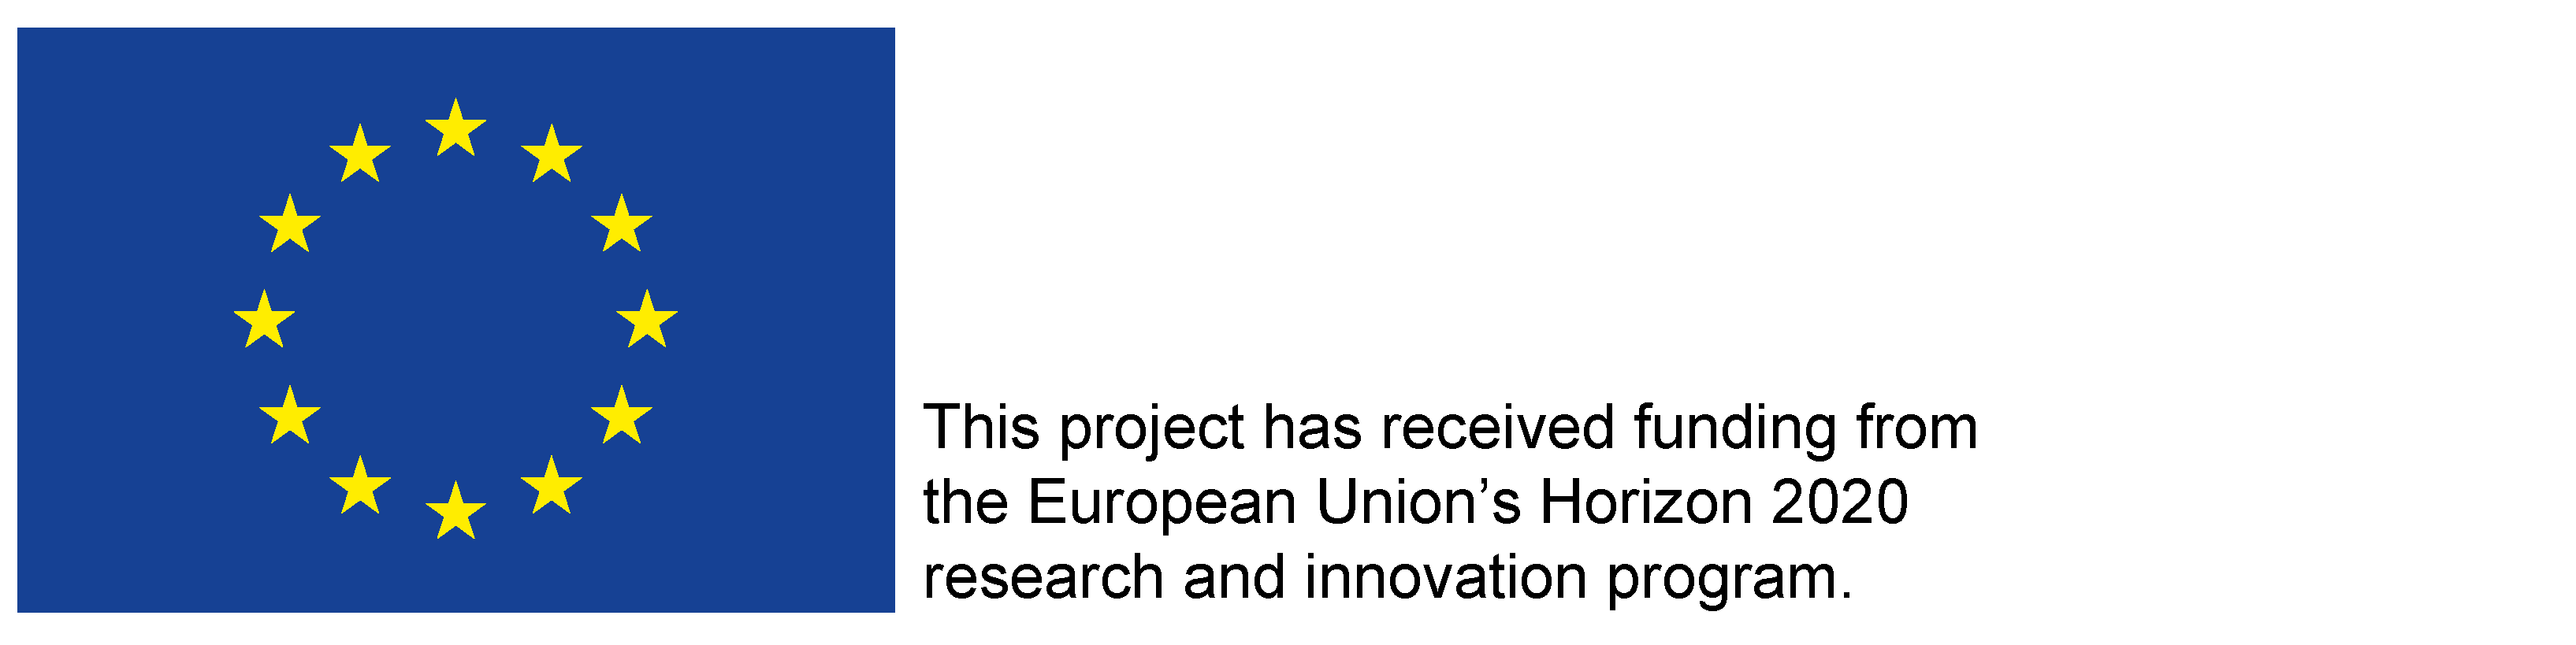 Horizon 2020 logotype